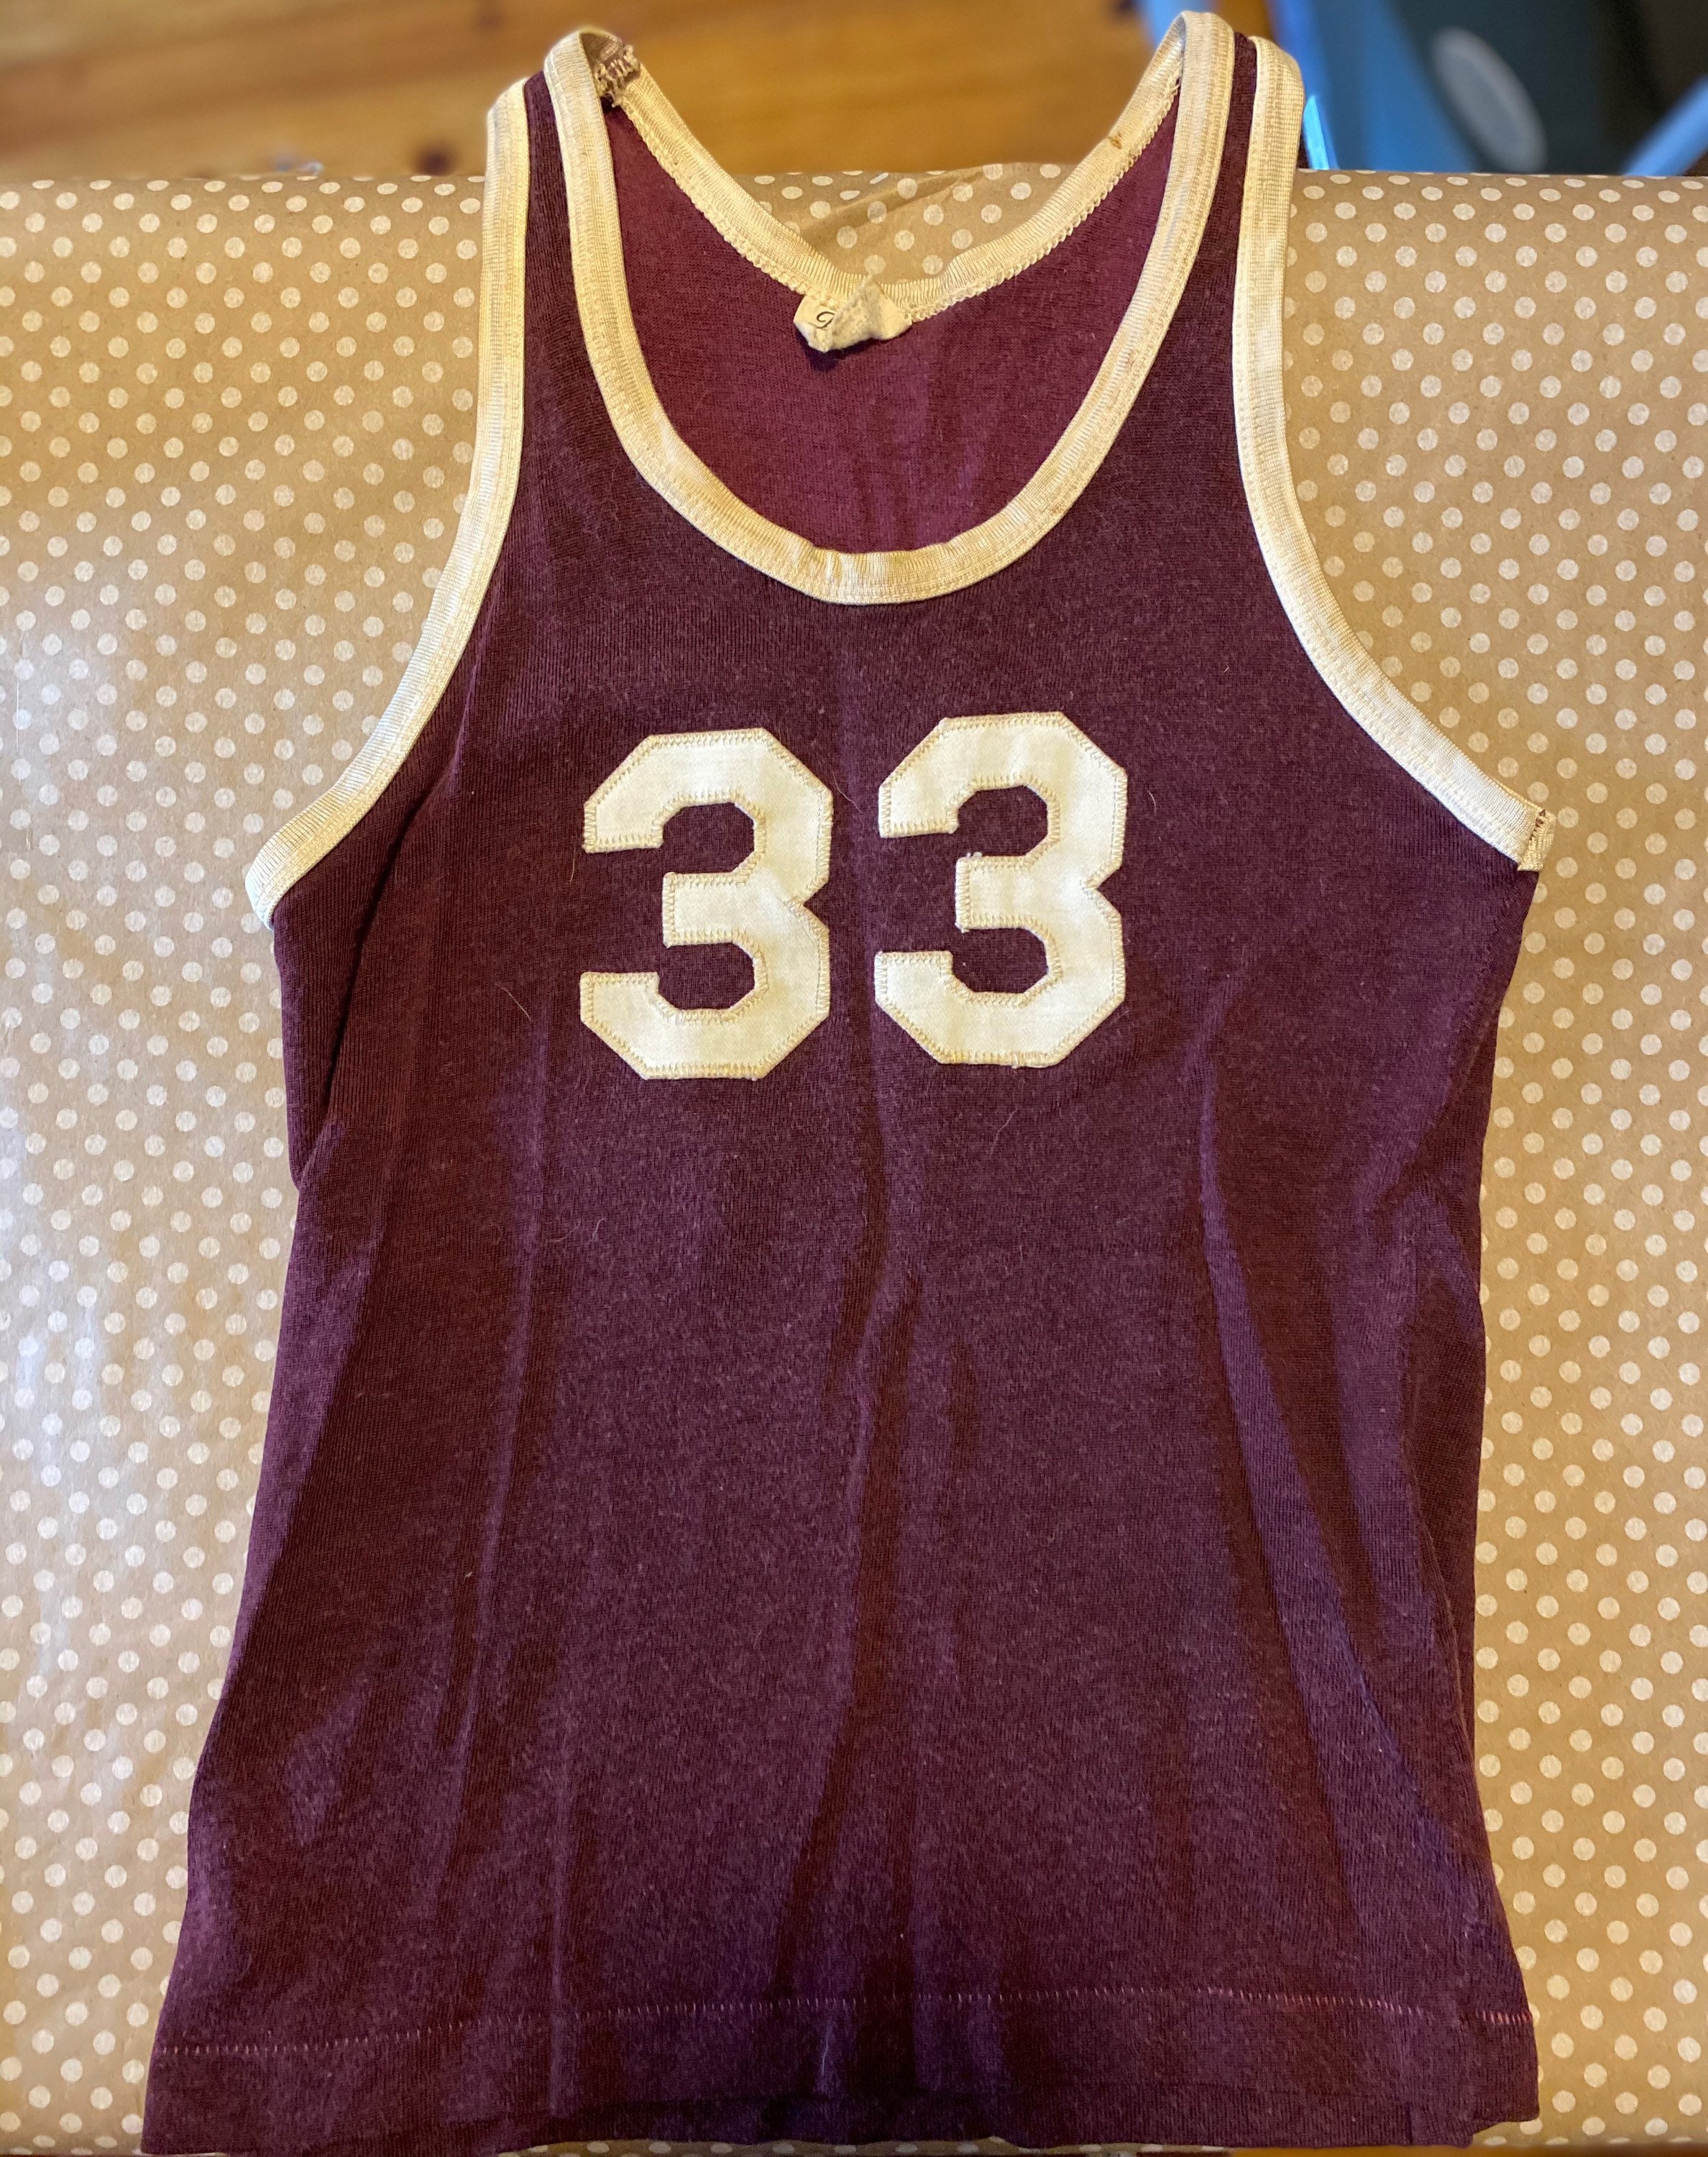 Wholesale N-B-a Retro Jersey Knicks No. 33 Ewing 1985-86 White Stiched  Swingman Vest Mitchell&Ness Uniform - China Wholesale Dropshipping N-Ba  Retrojerseys and Knicks No. 33 Ewing 1985-86 Retro Jersey Vest price